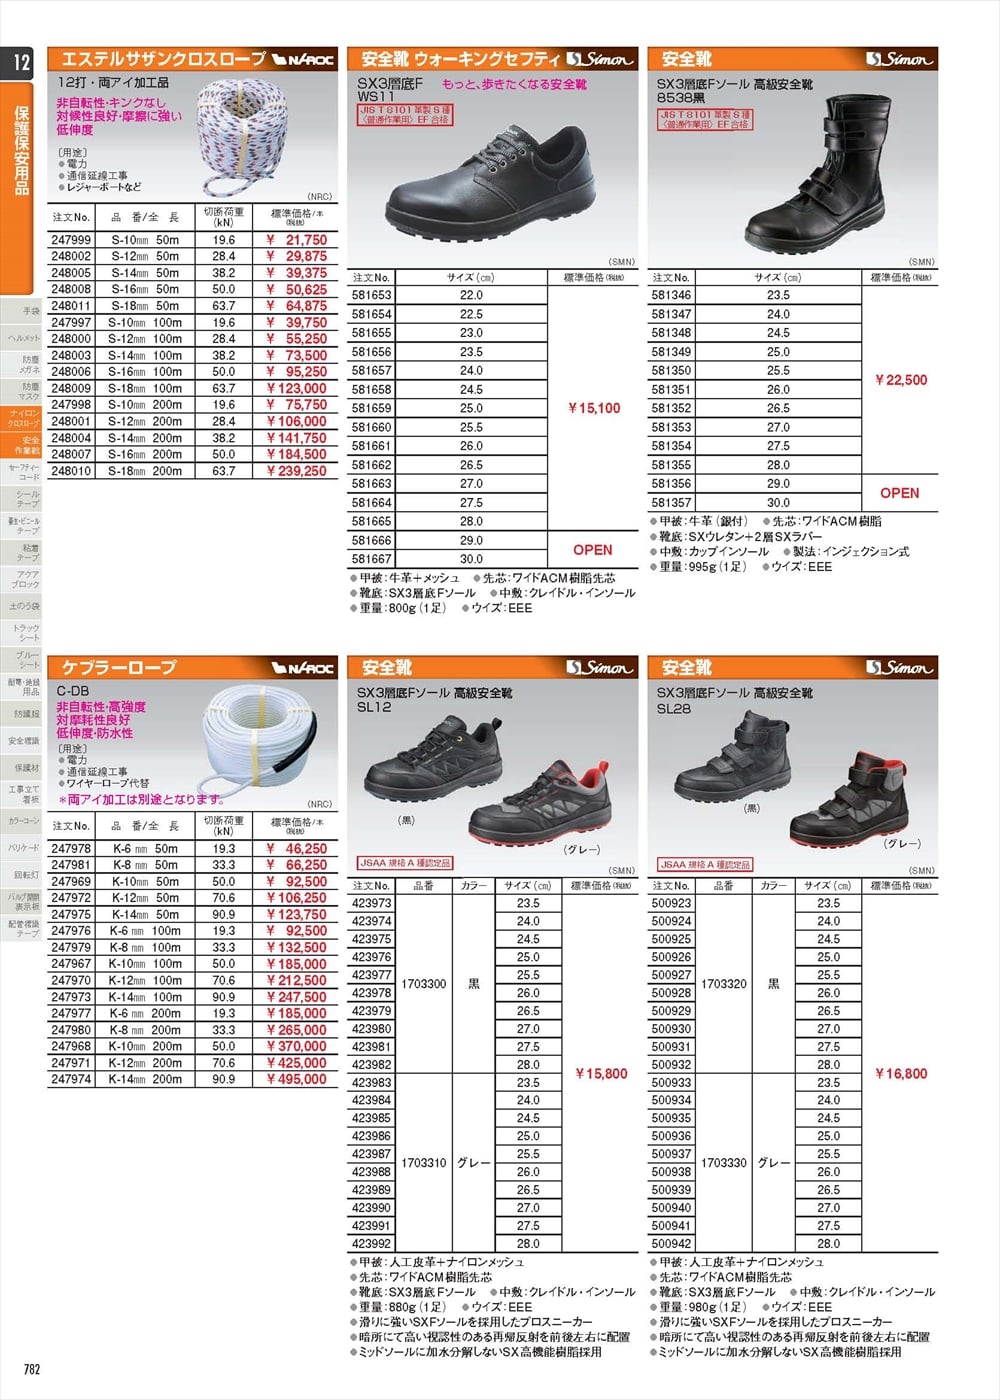 1703320 (500931)】 《KJK》 シモン SL28黒 プロスニーカー安全靴27.5